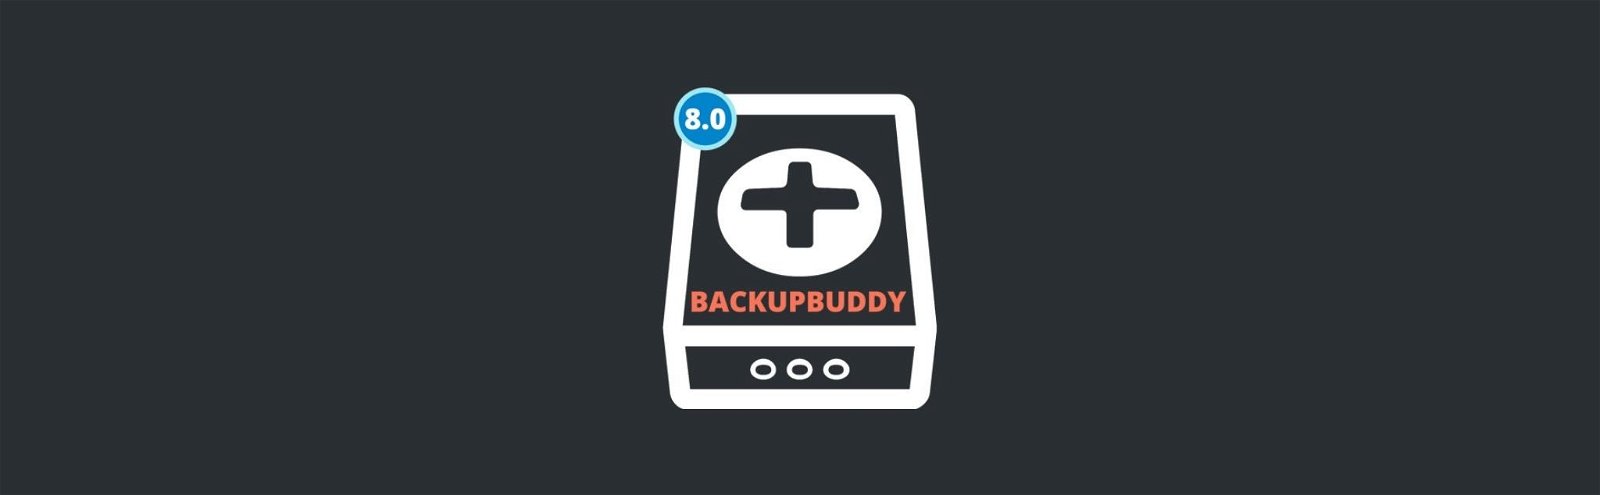 BackupBuddy 8.0